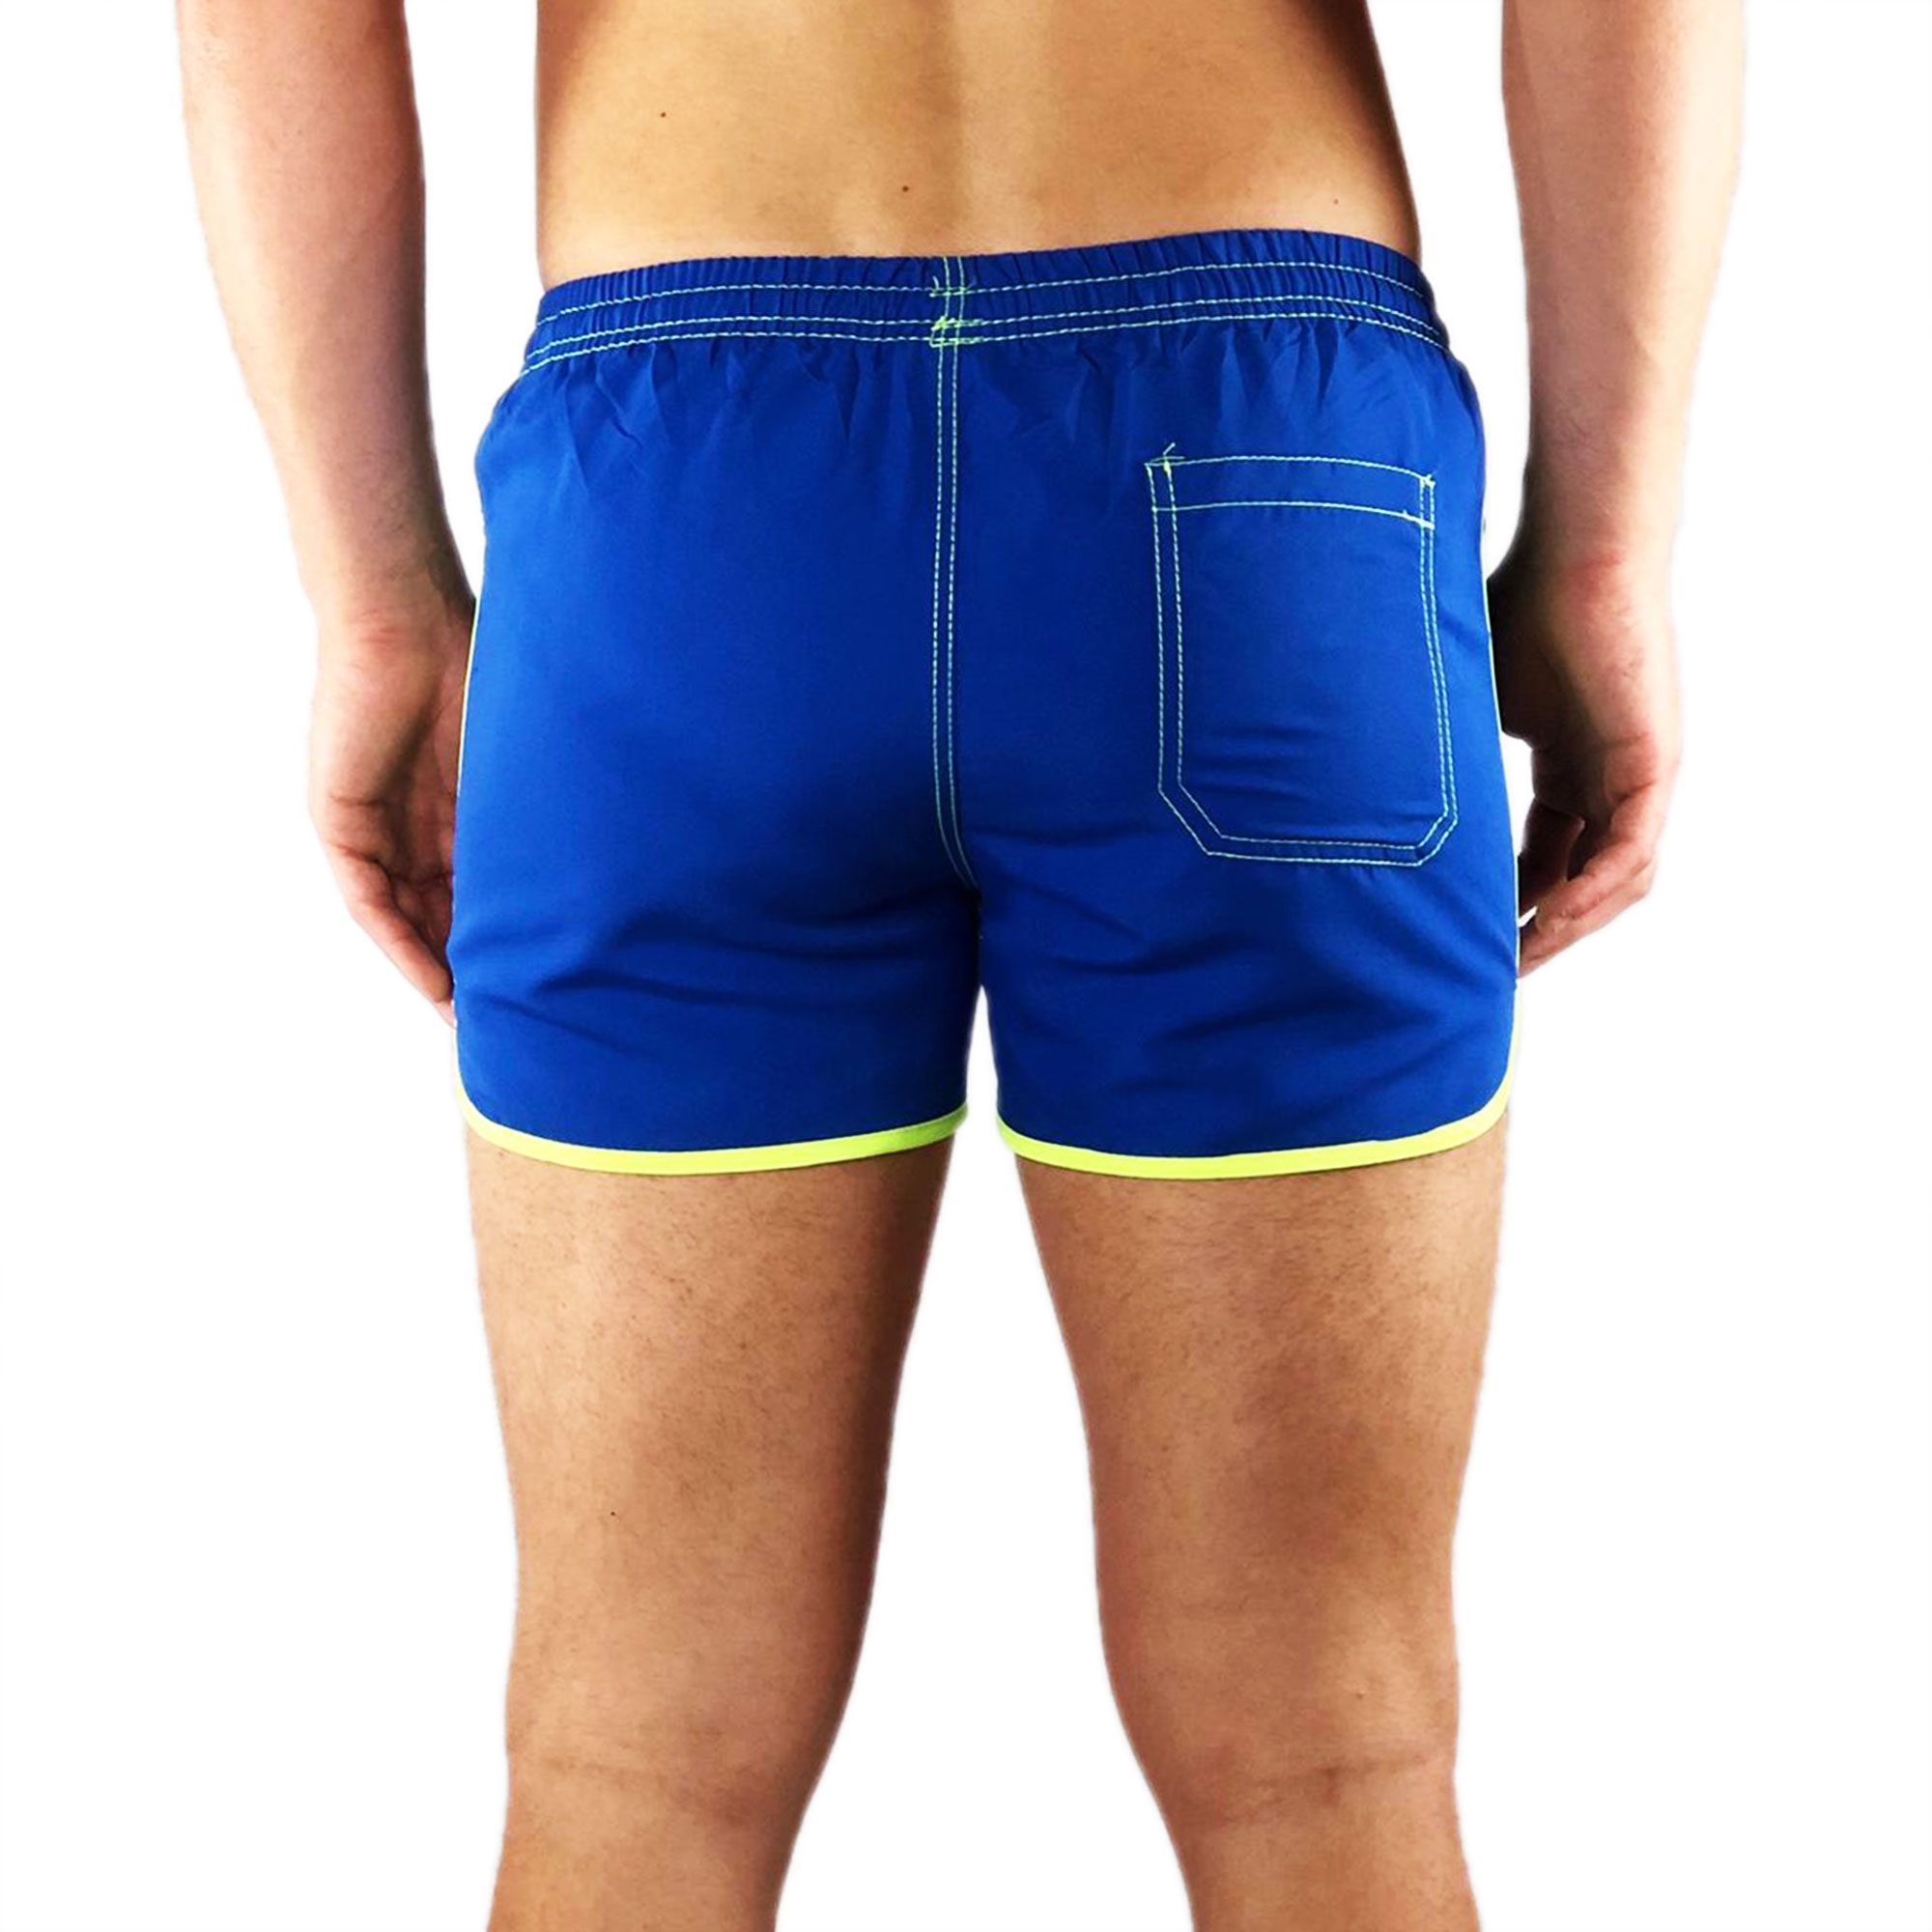 Swimsuit man boxer short sea shorts shorts Bermuda Pool | eBay